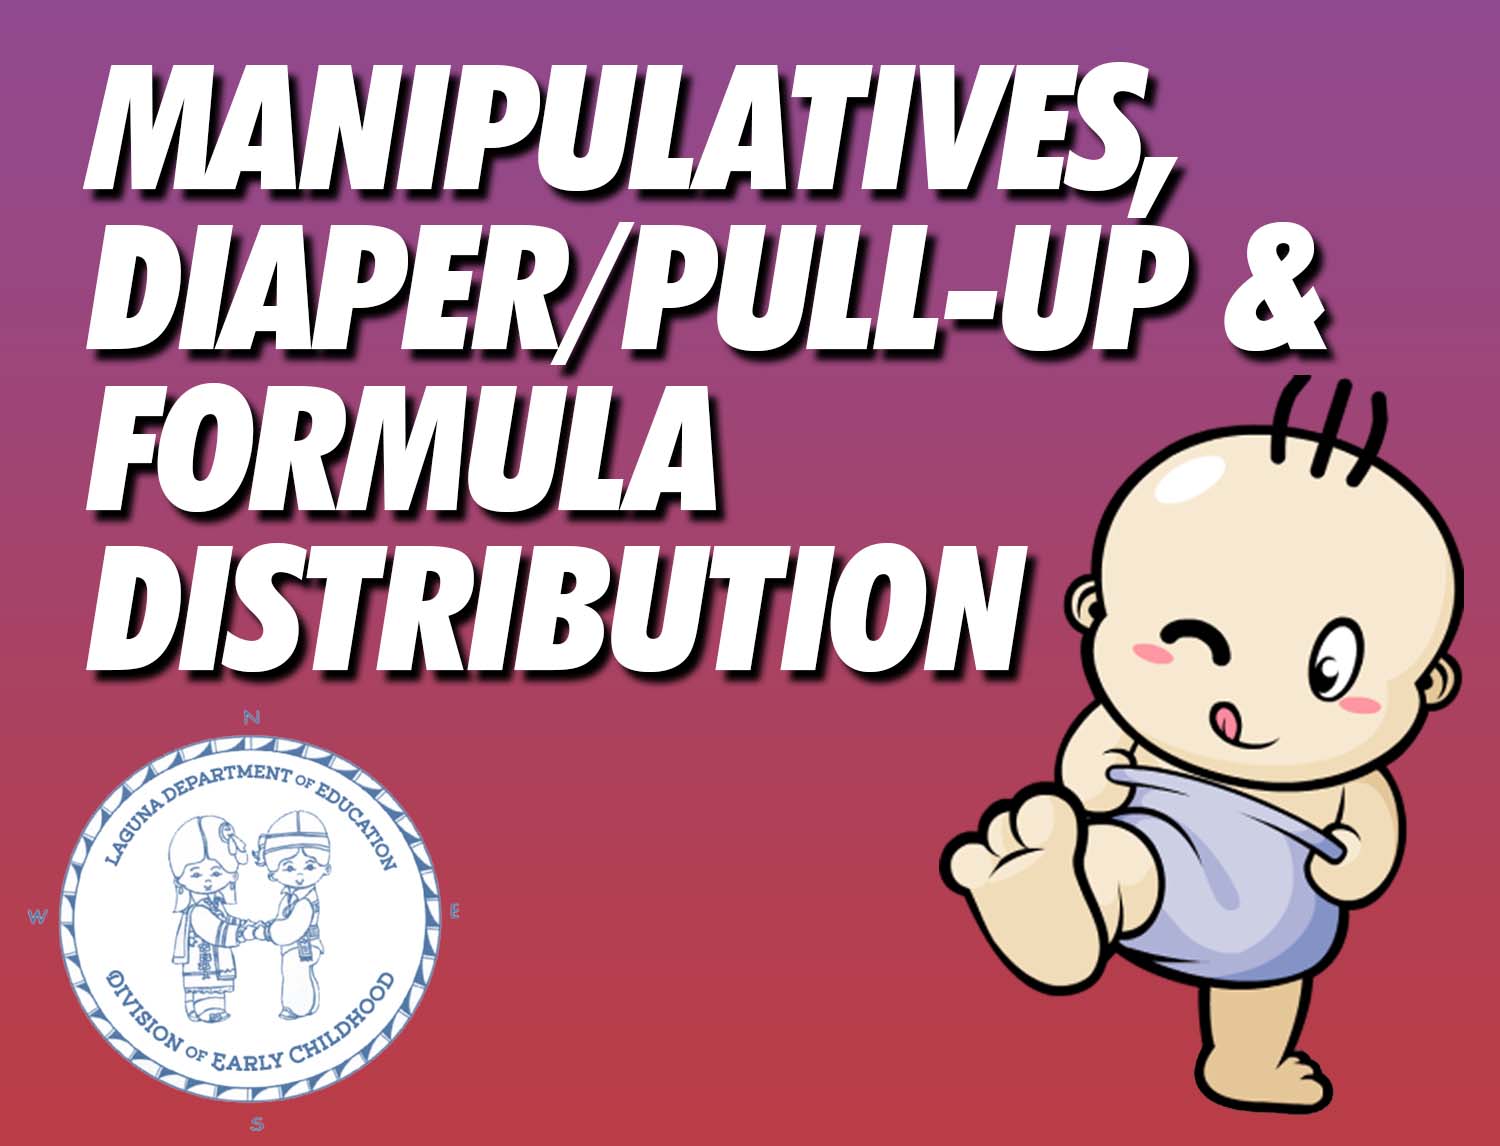 MANIPULATIVES, DIAPER/PULL-UP & FORMULA DISTRIBUTION SCHEDULE